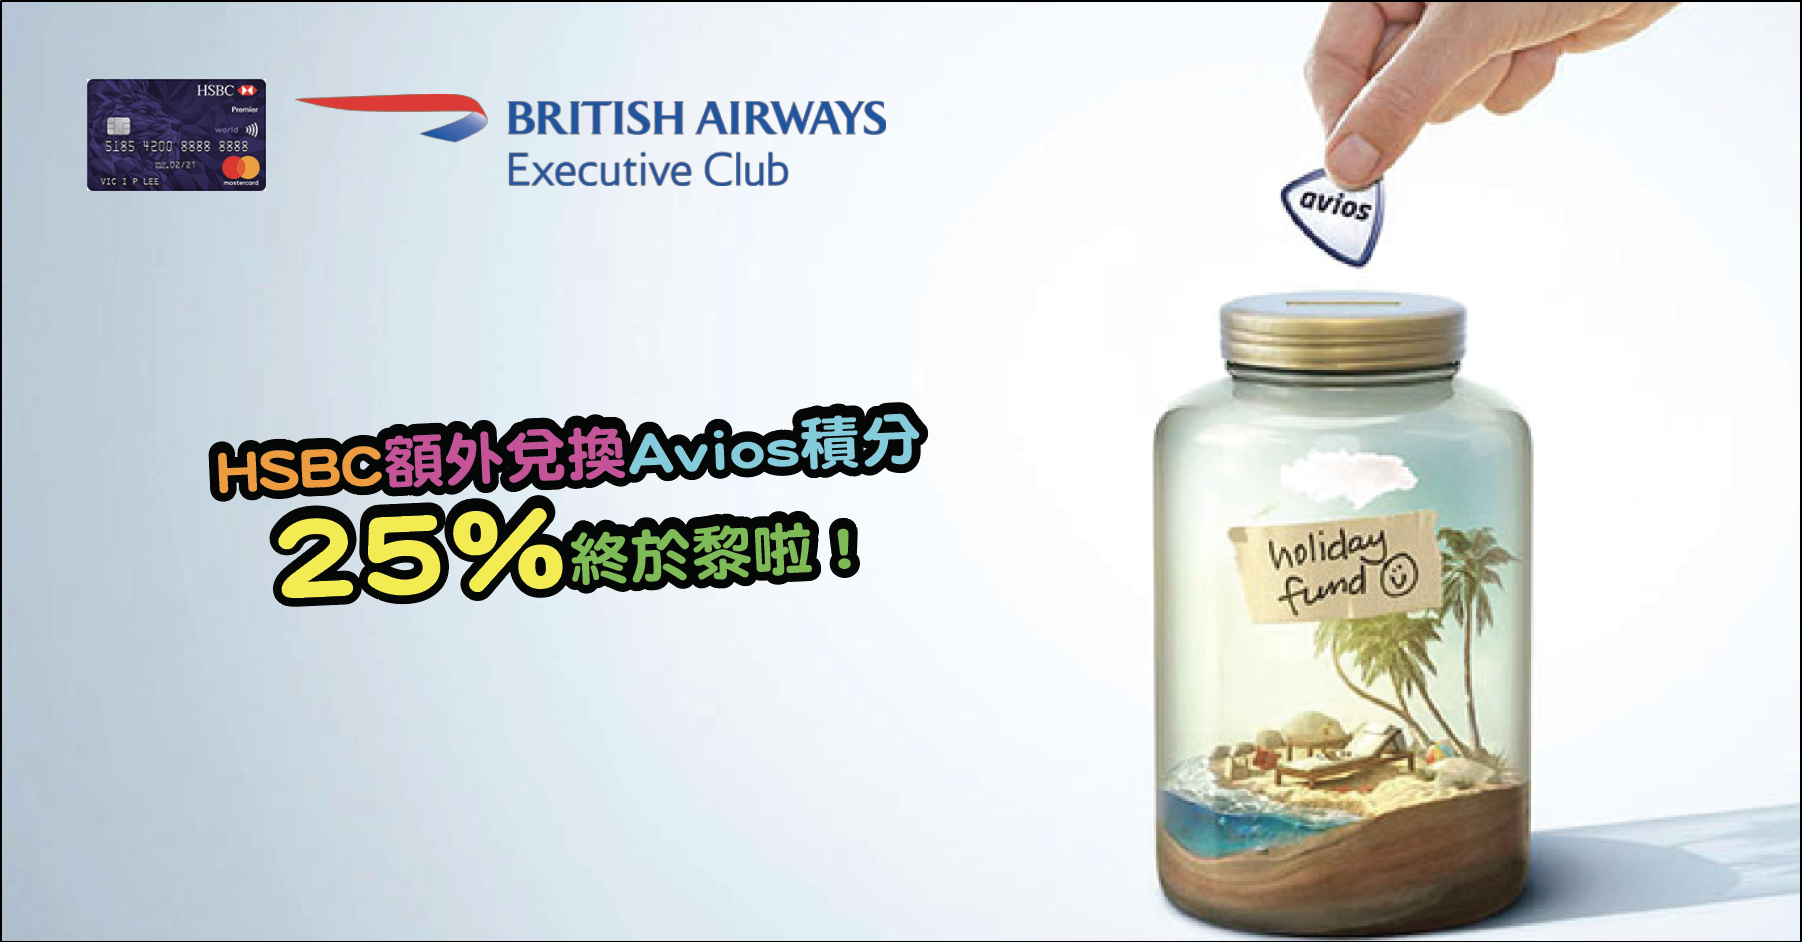 【HSBC信用卡兌換Avios優惠】「獎賞錢」轉換成英航會員俱樂部 Executive Club Avios 有25%額外Avios積分！1「獎賞錢」=18.75 Avios積分！